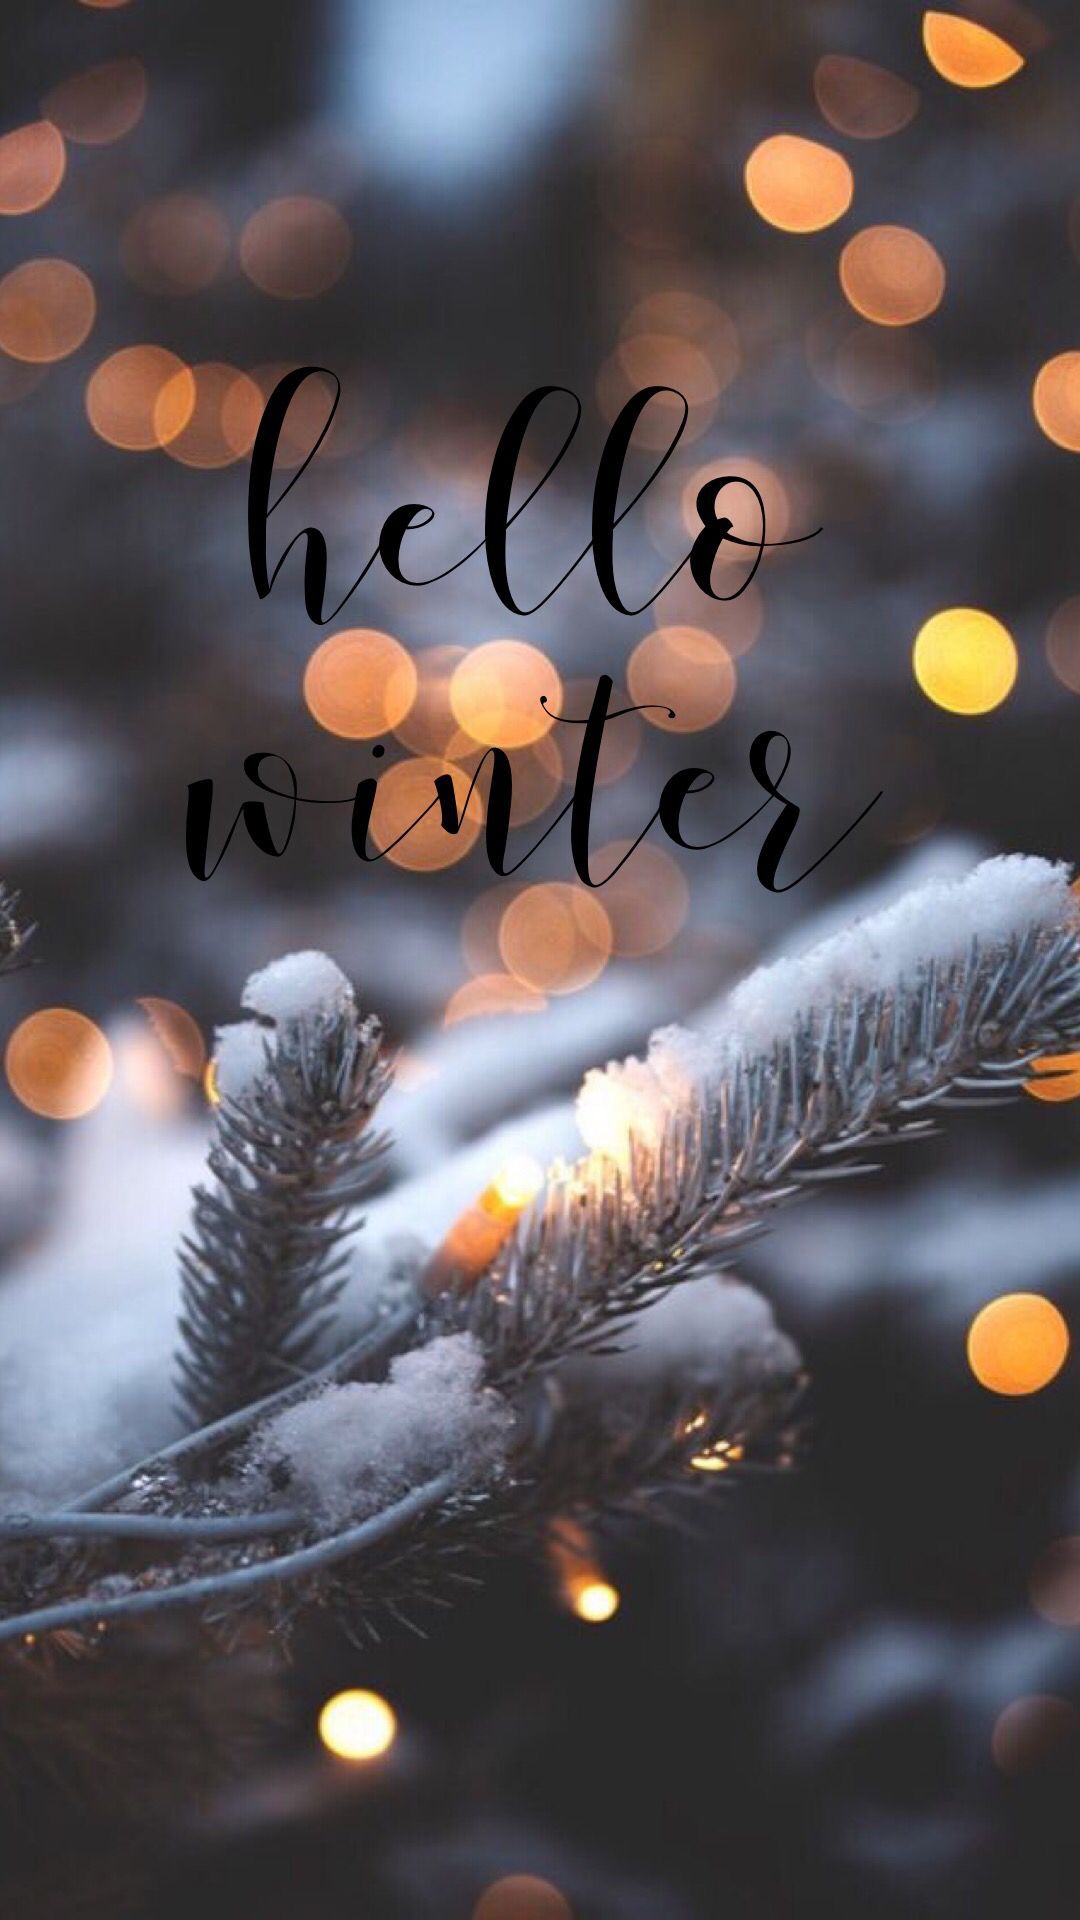 Hello December Wallpaper Winter Background Stock Photo 521768314 |  Shutterstock